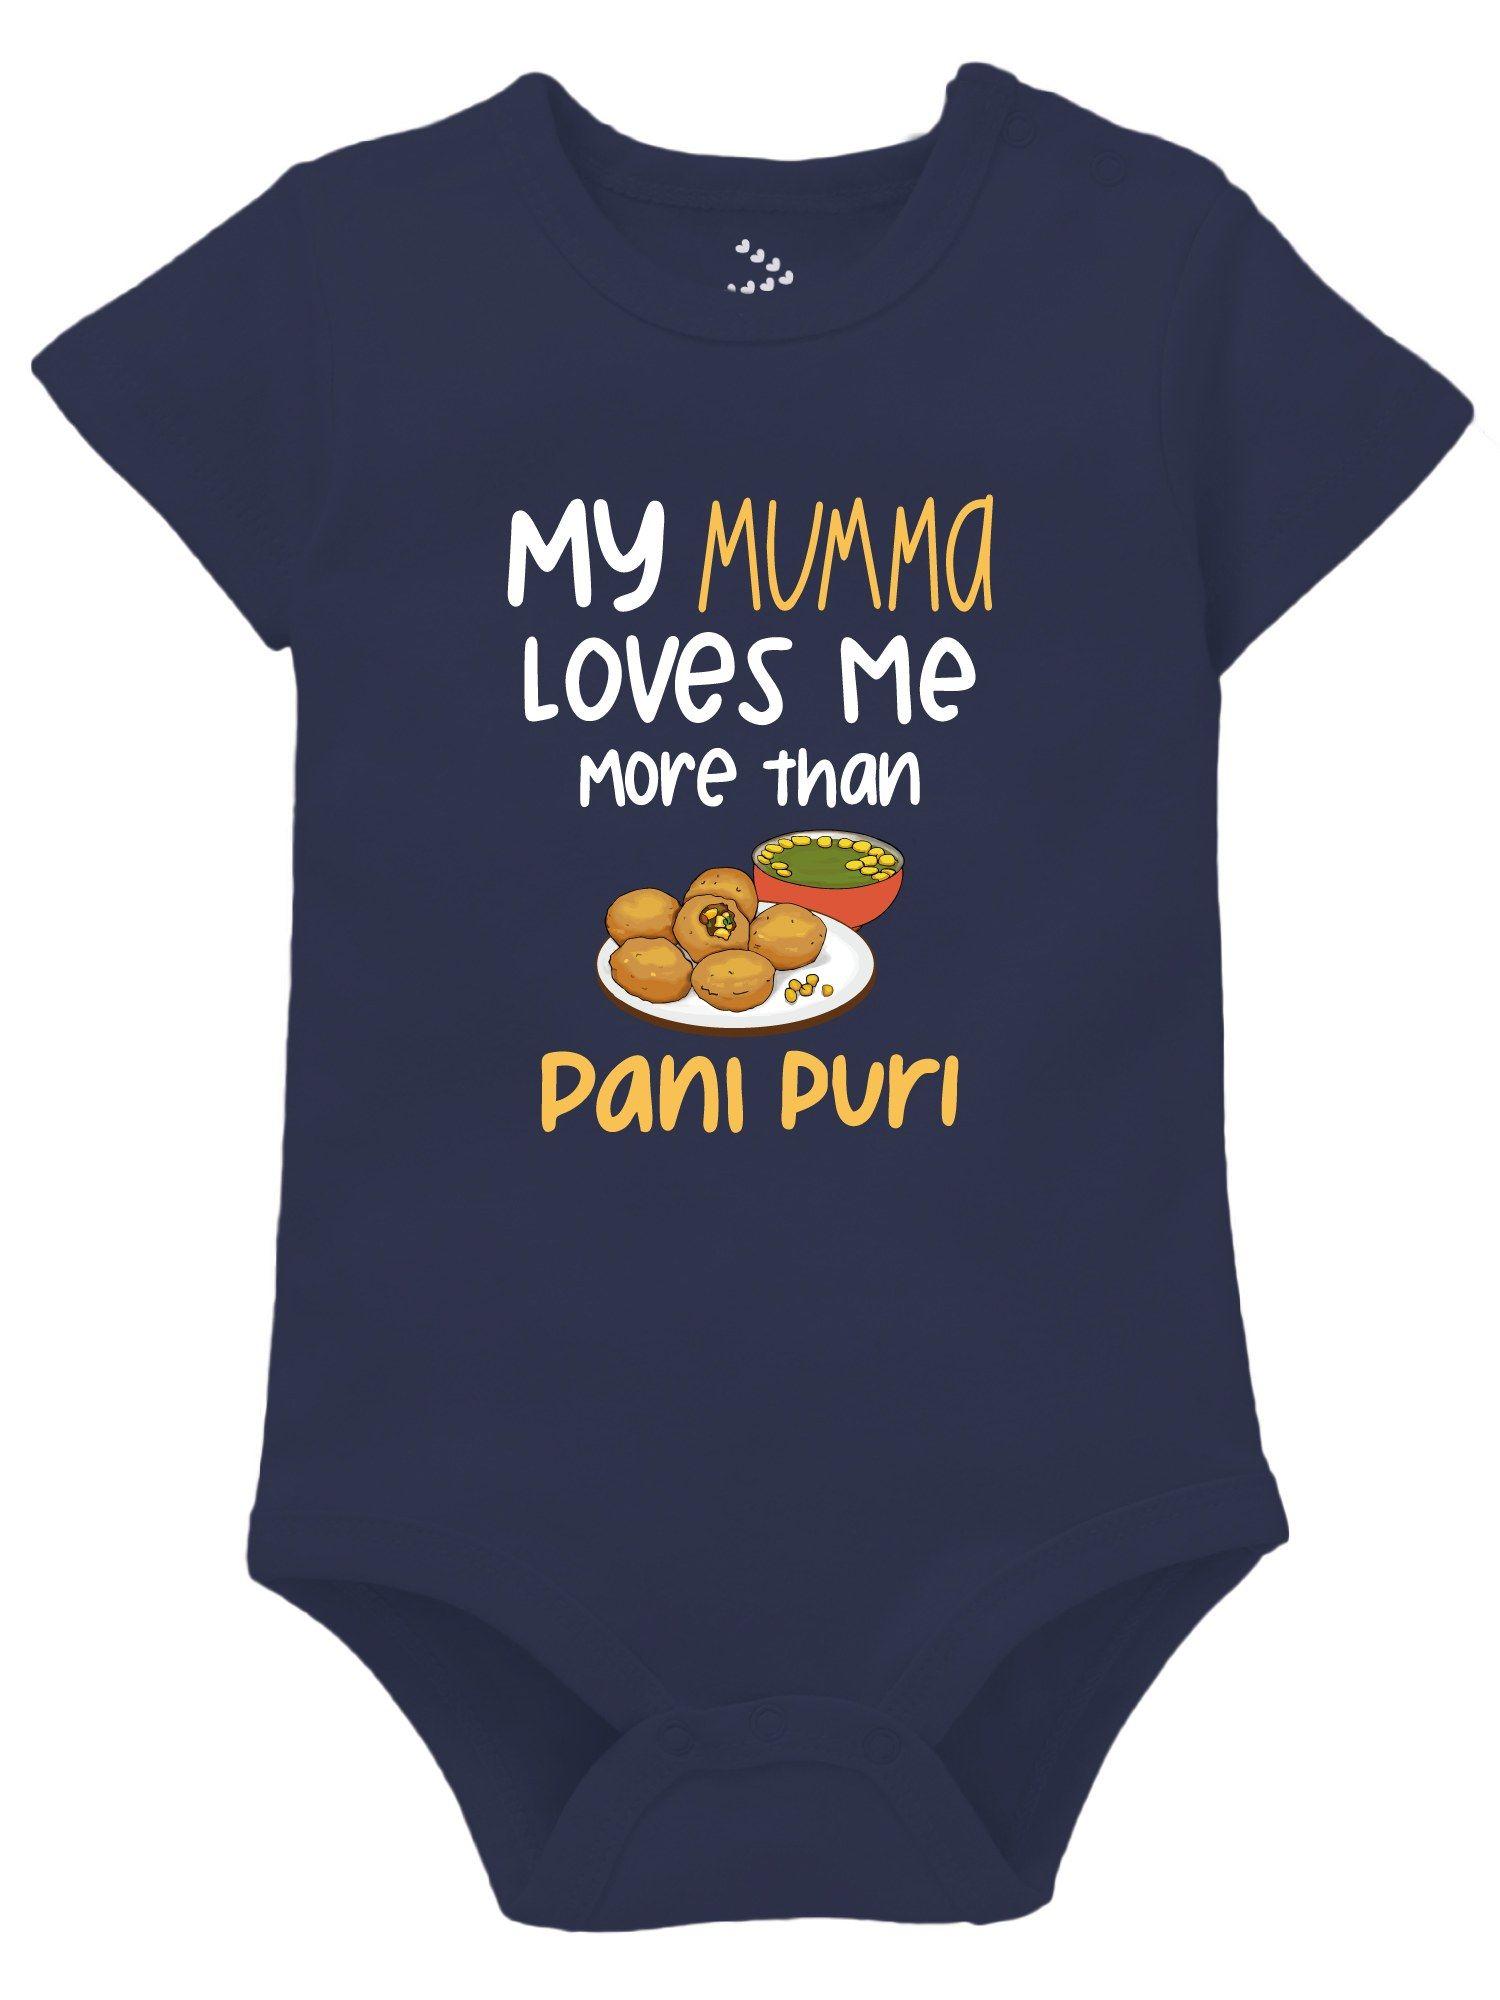 my mumma loves me more than pani puri baby bodysuit navy blue